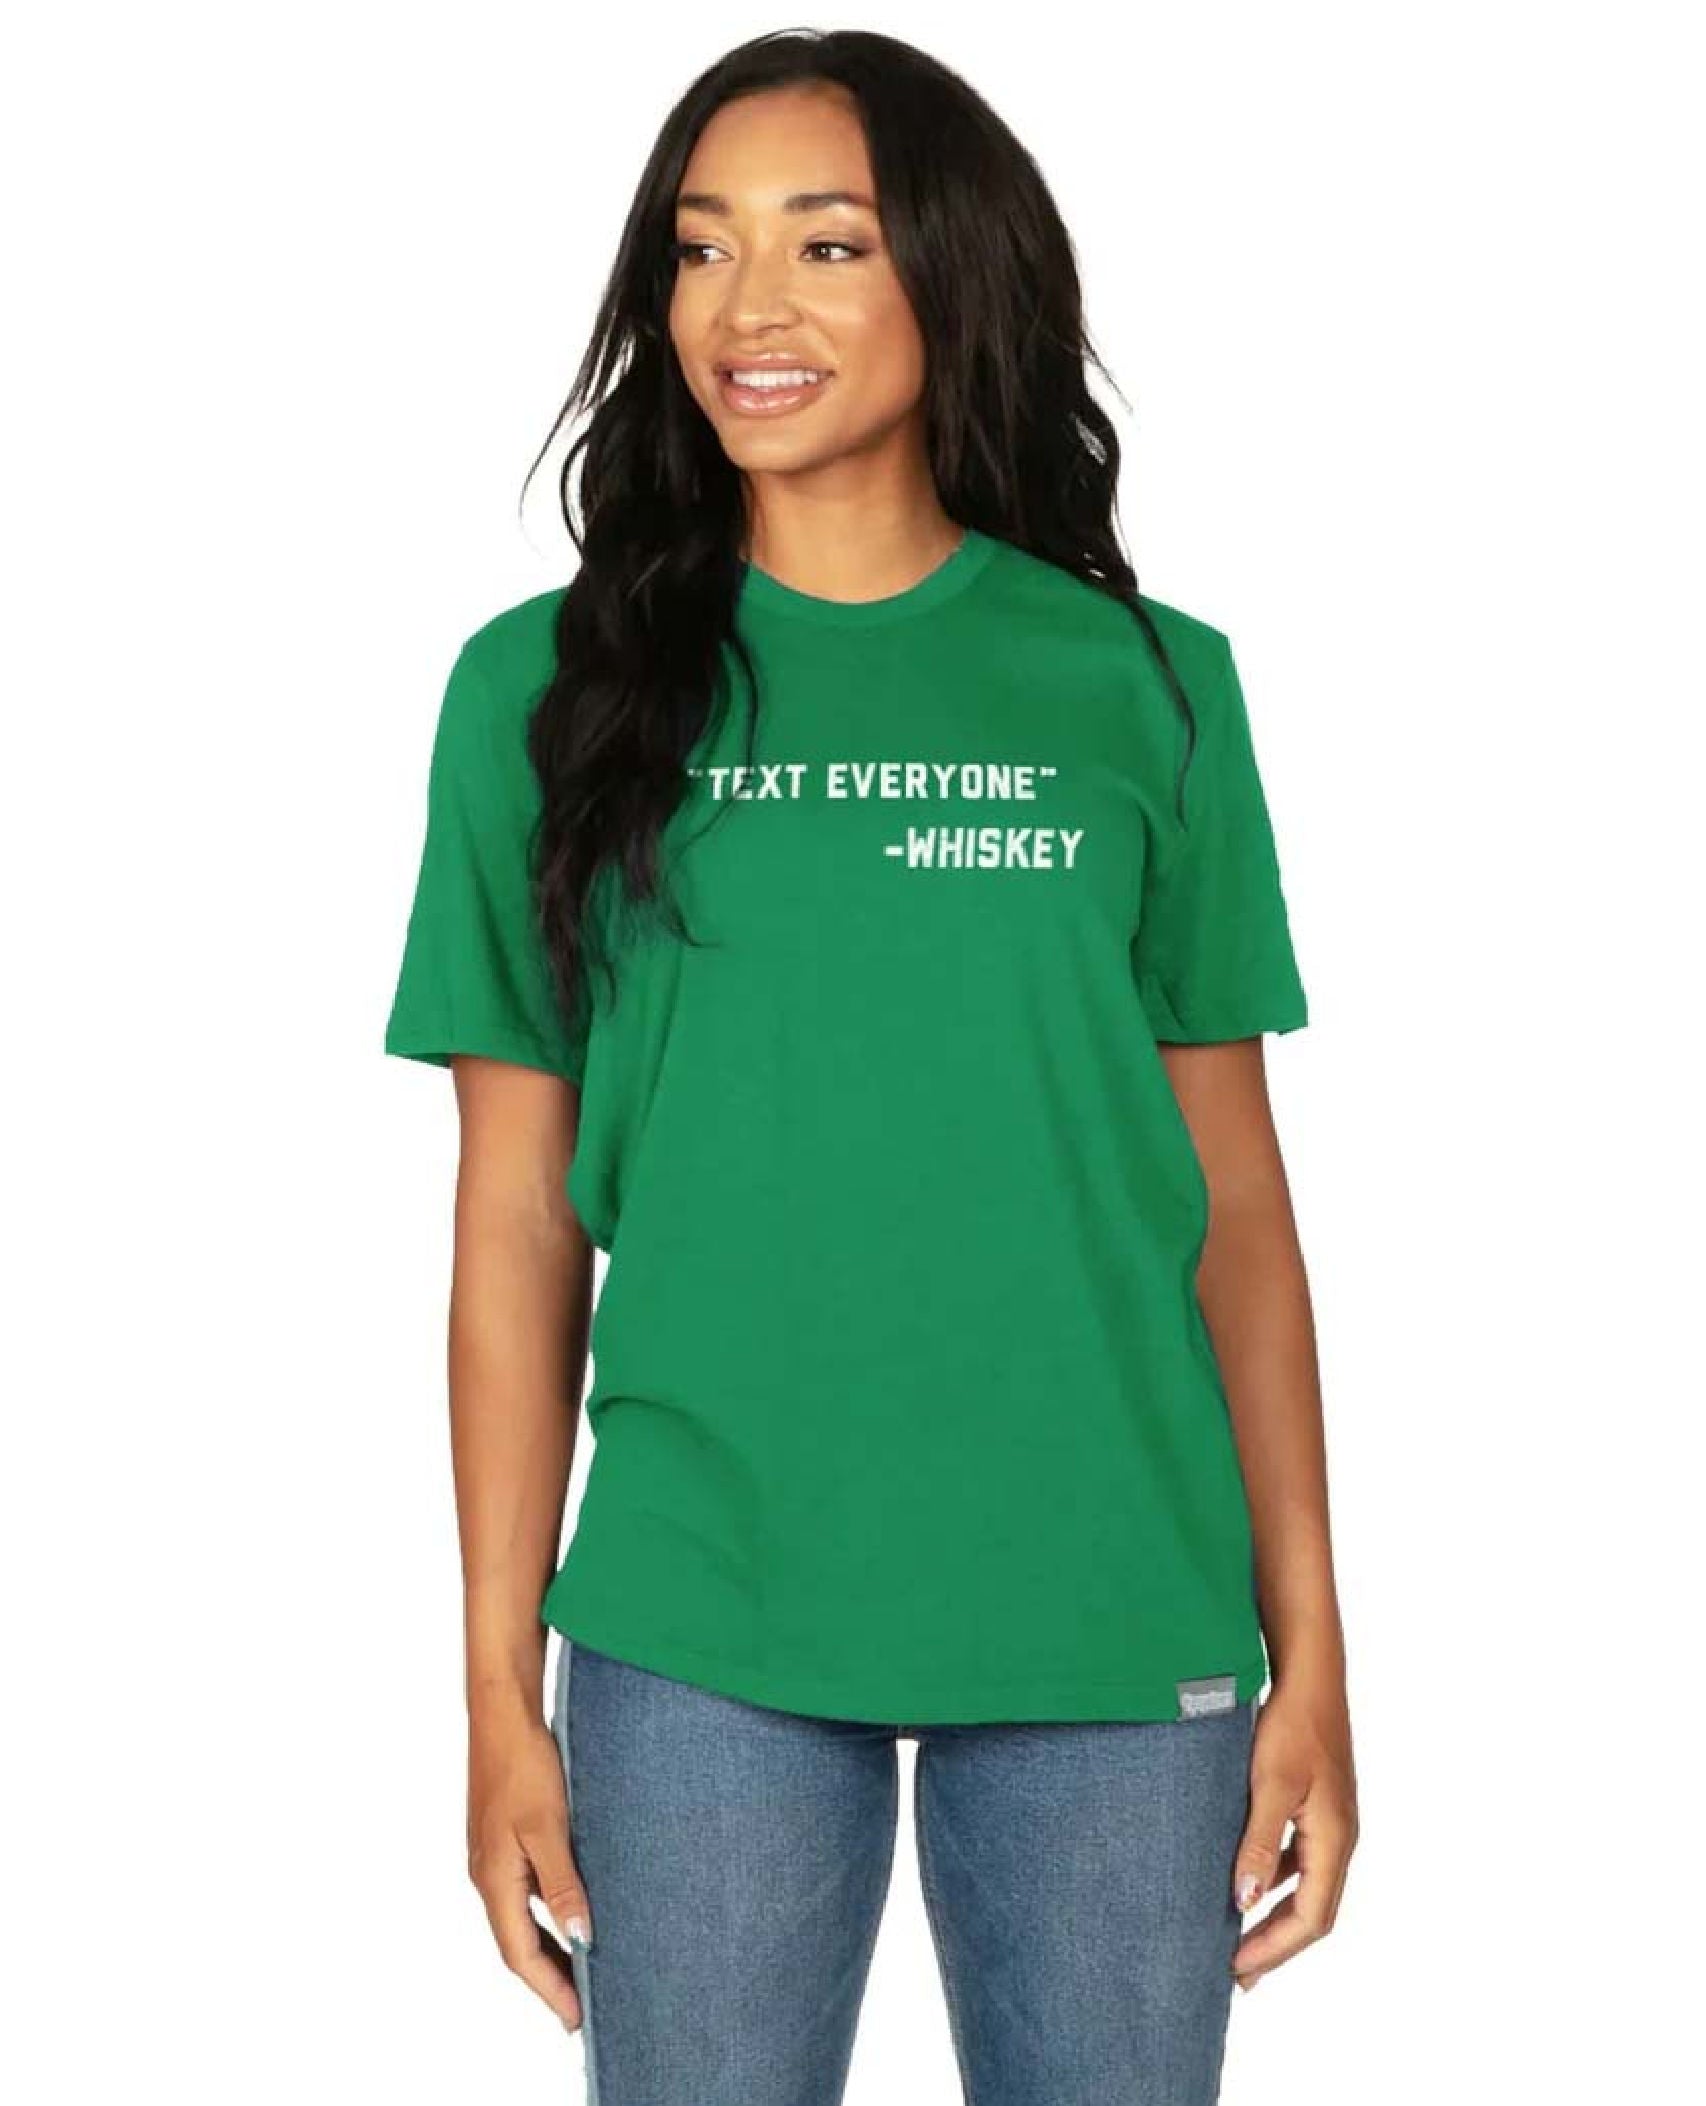 Text Everyone Green Short Sleeve Tee Shirt